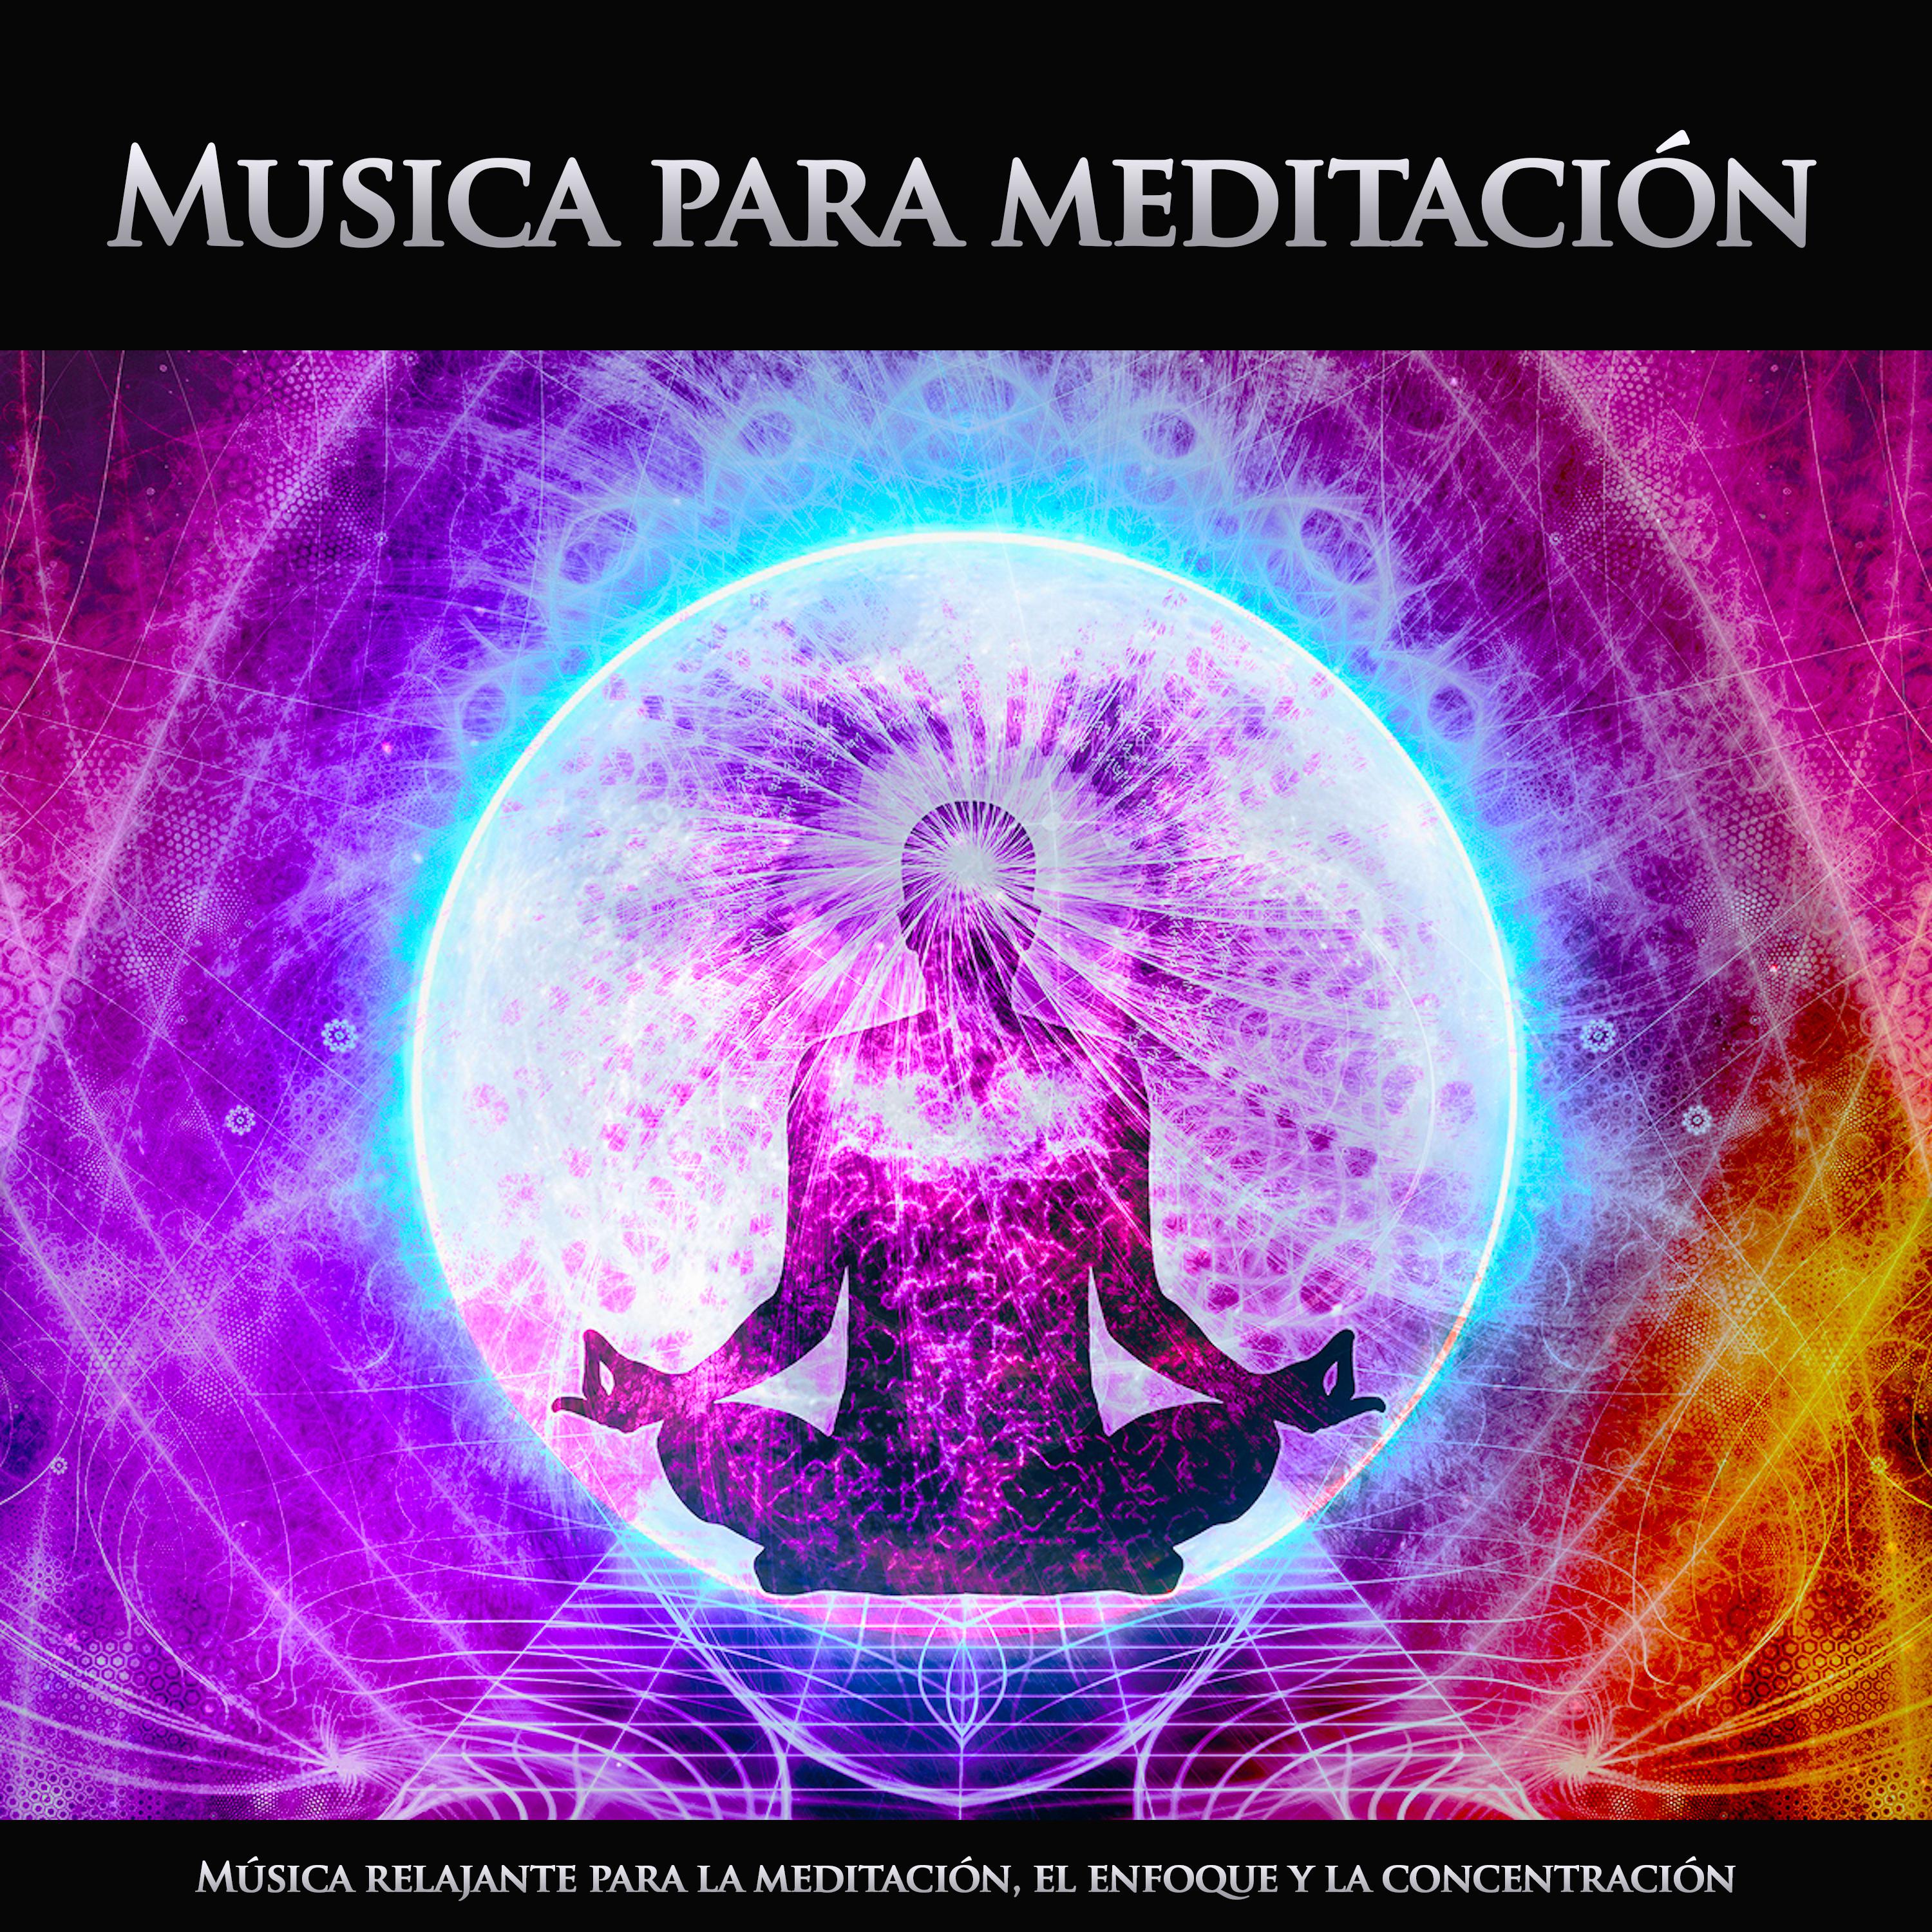 Musica para meditación - Música tranquila